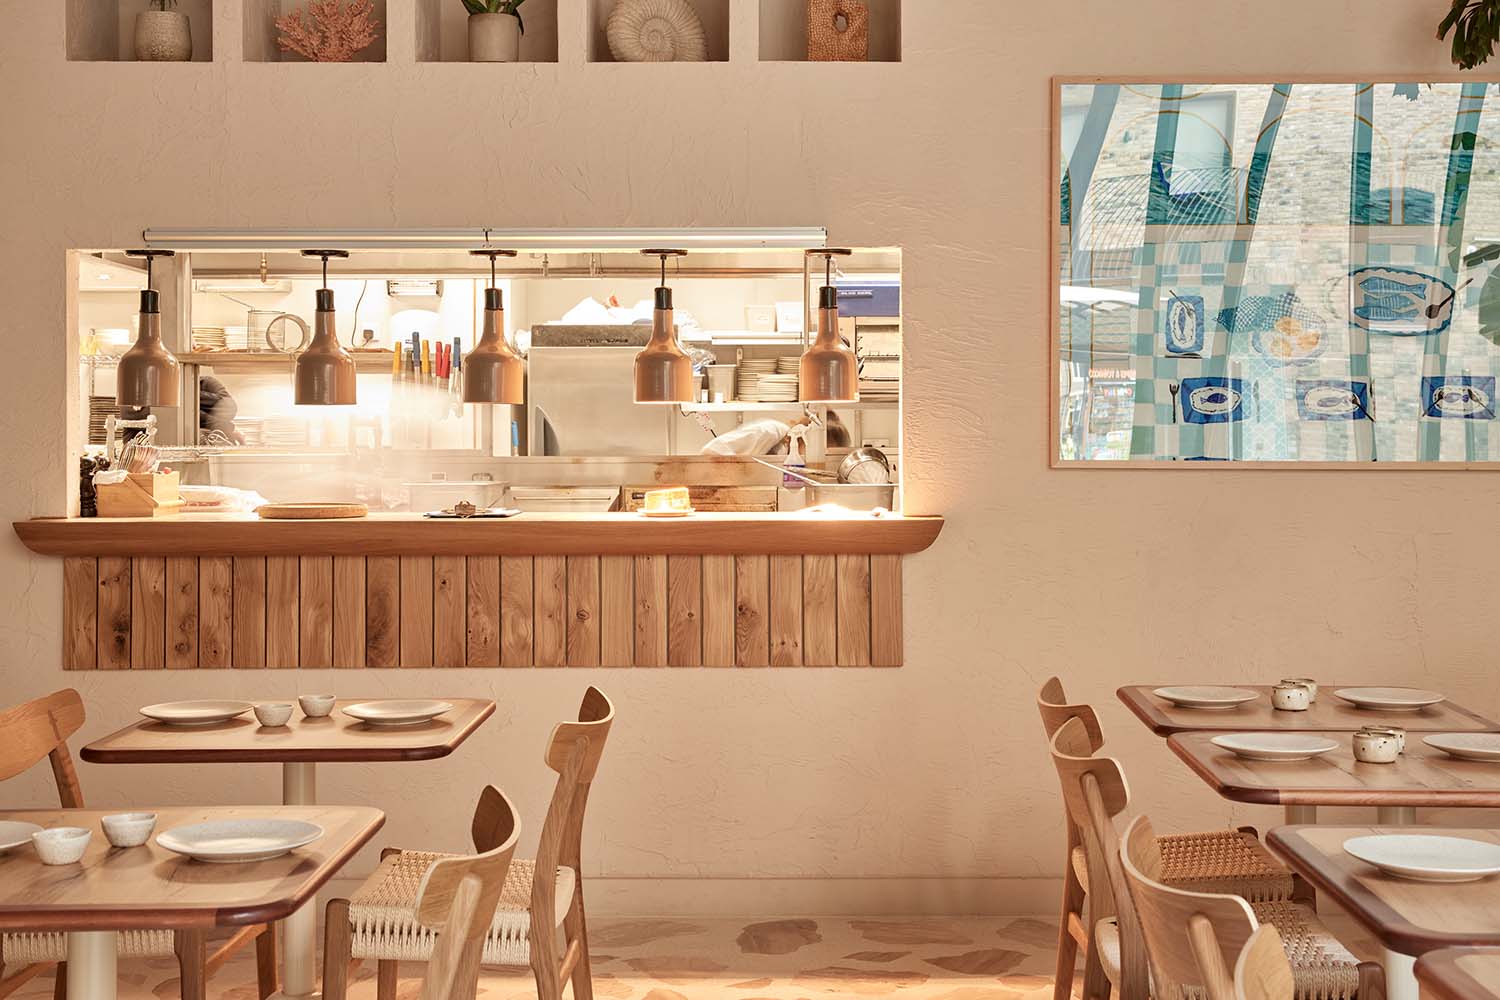 Milk Beach Soho London Restaurant Designed by A-nrd studio